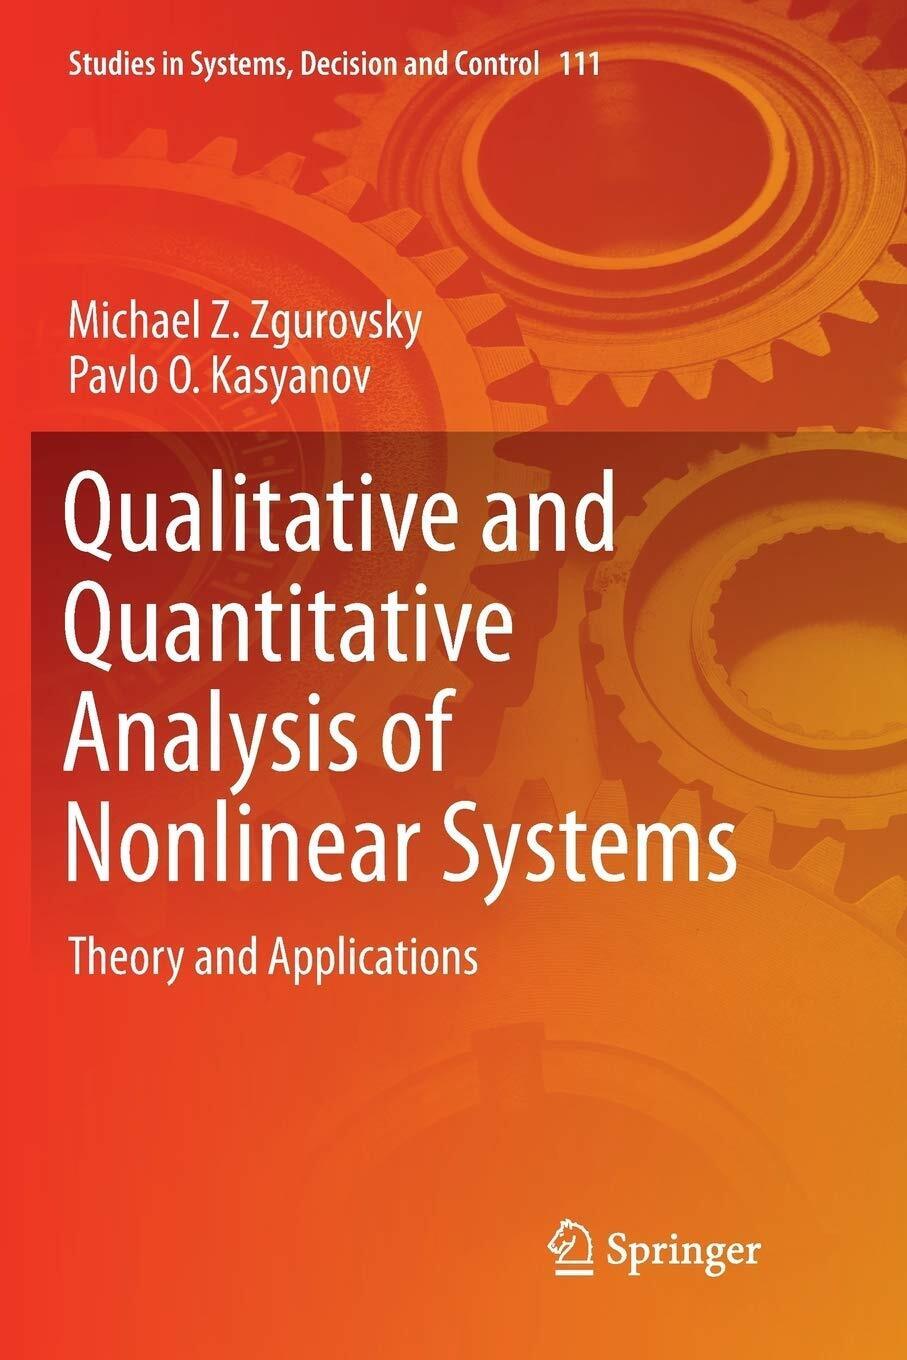 Qualitative and Quantitative Analysis of Nonlinear Systems - Springer, 2018 libro usato